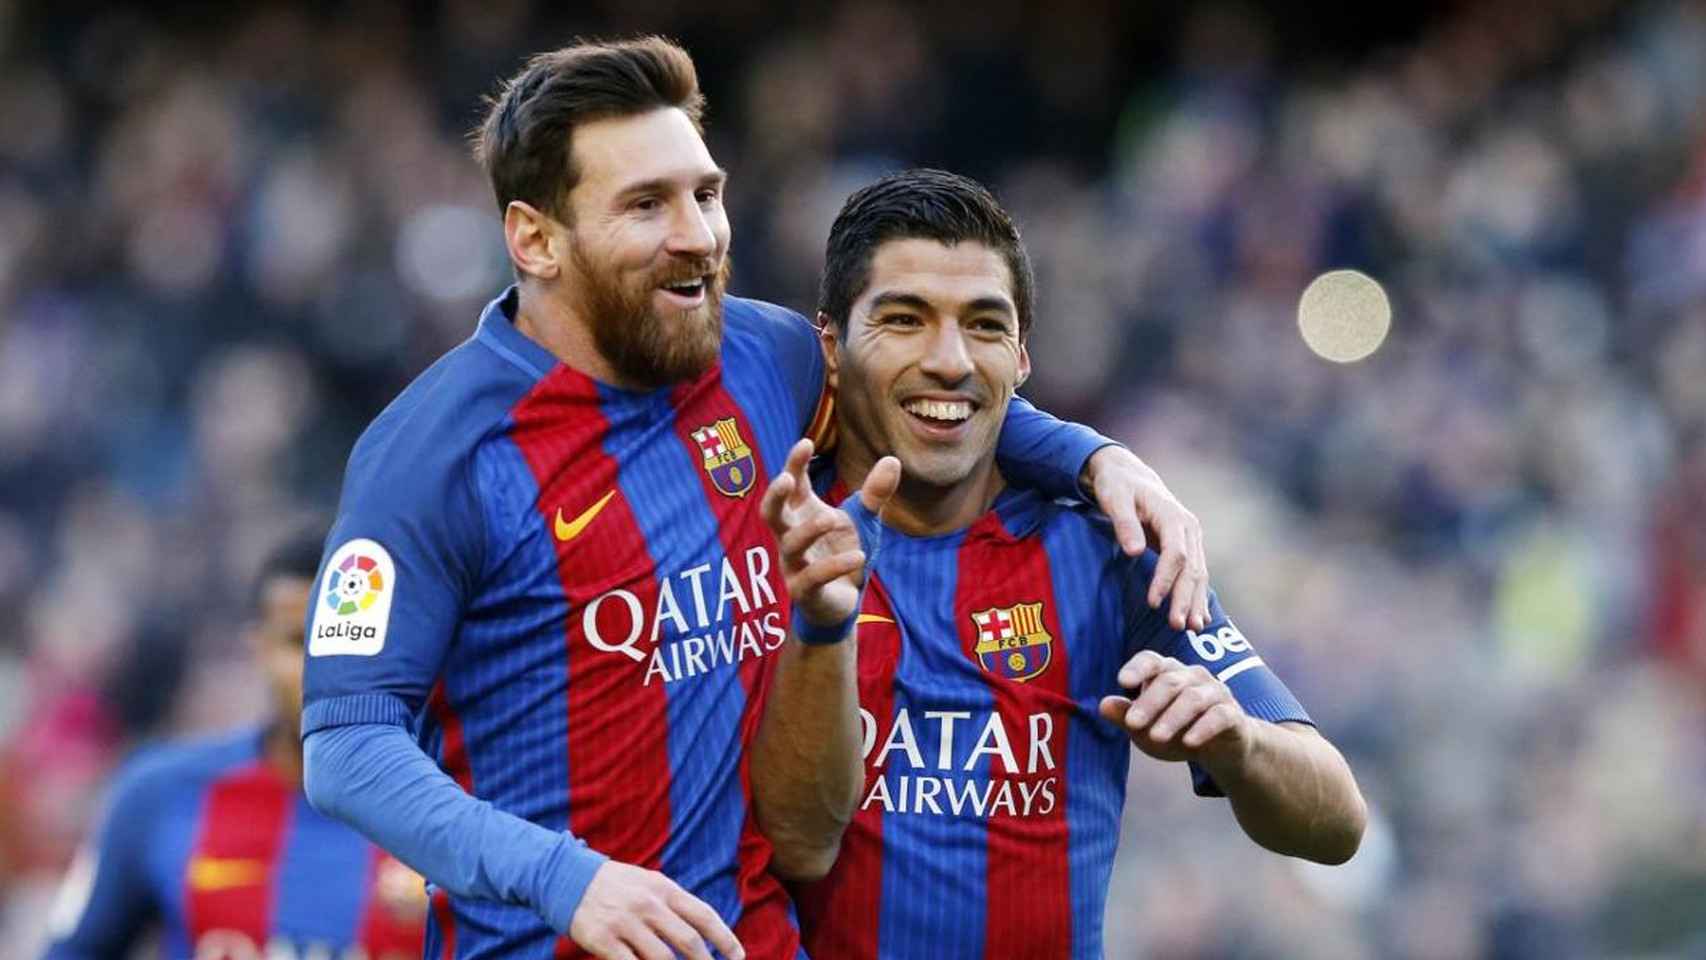 Leo Messi festeja con Luis Suárez un gol anotado con la camiseta del Barça